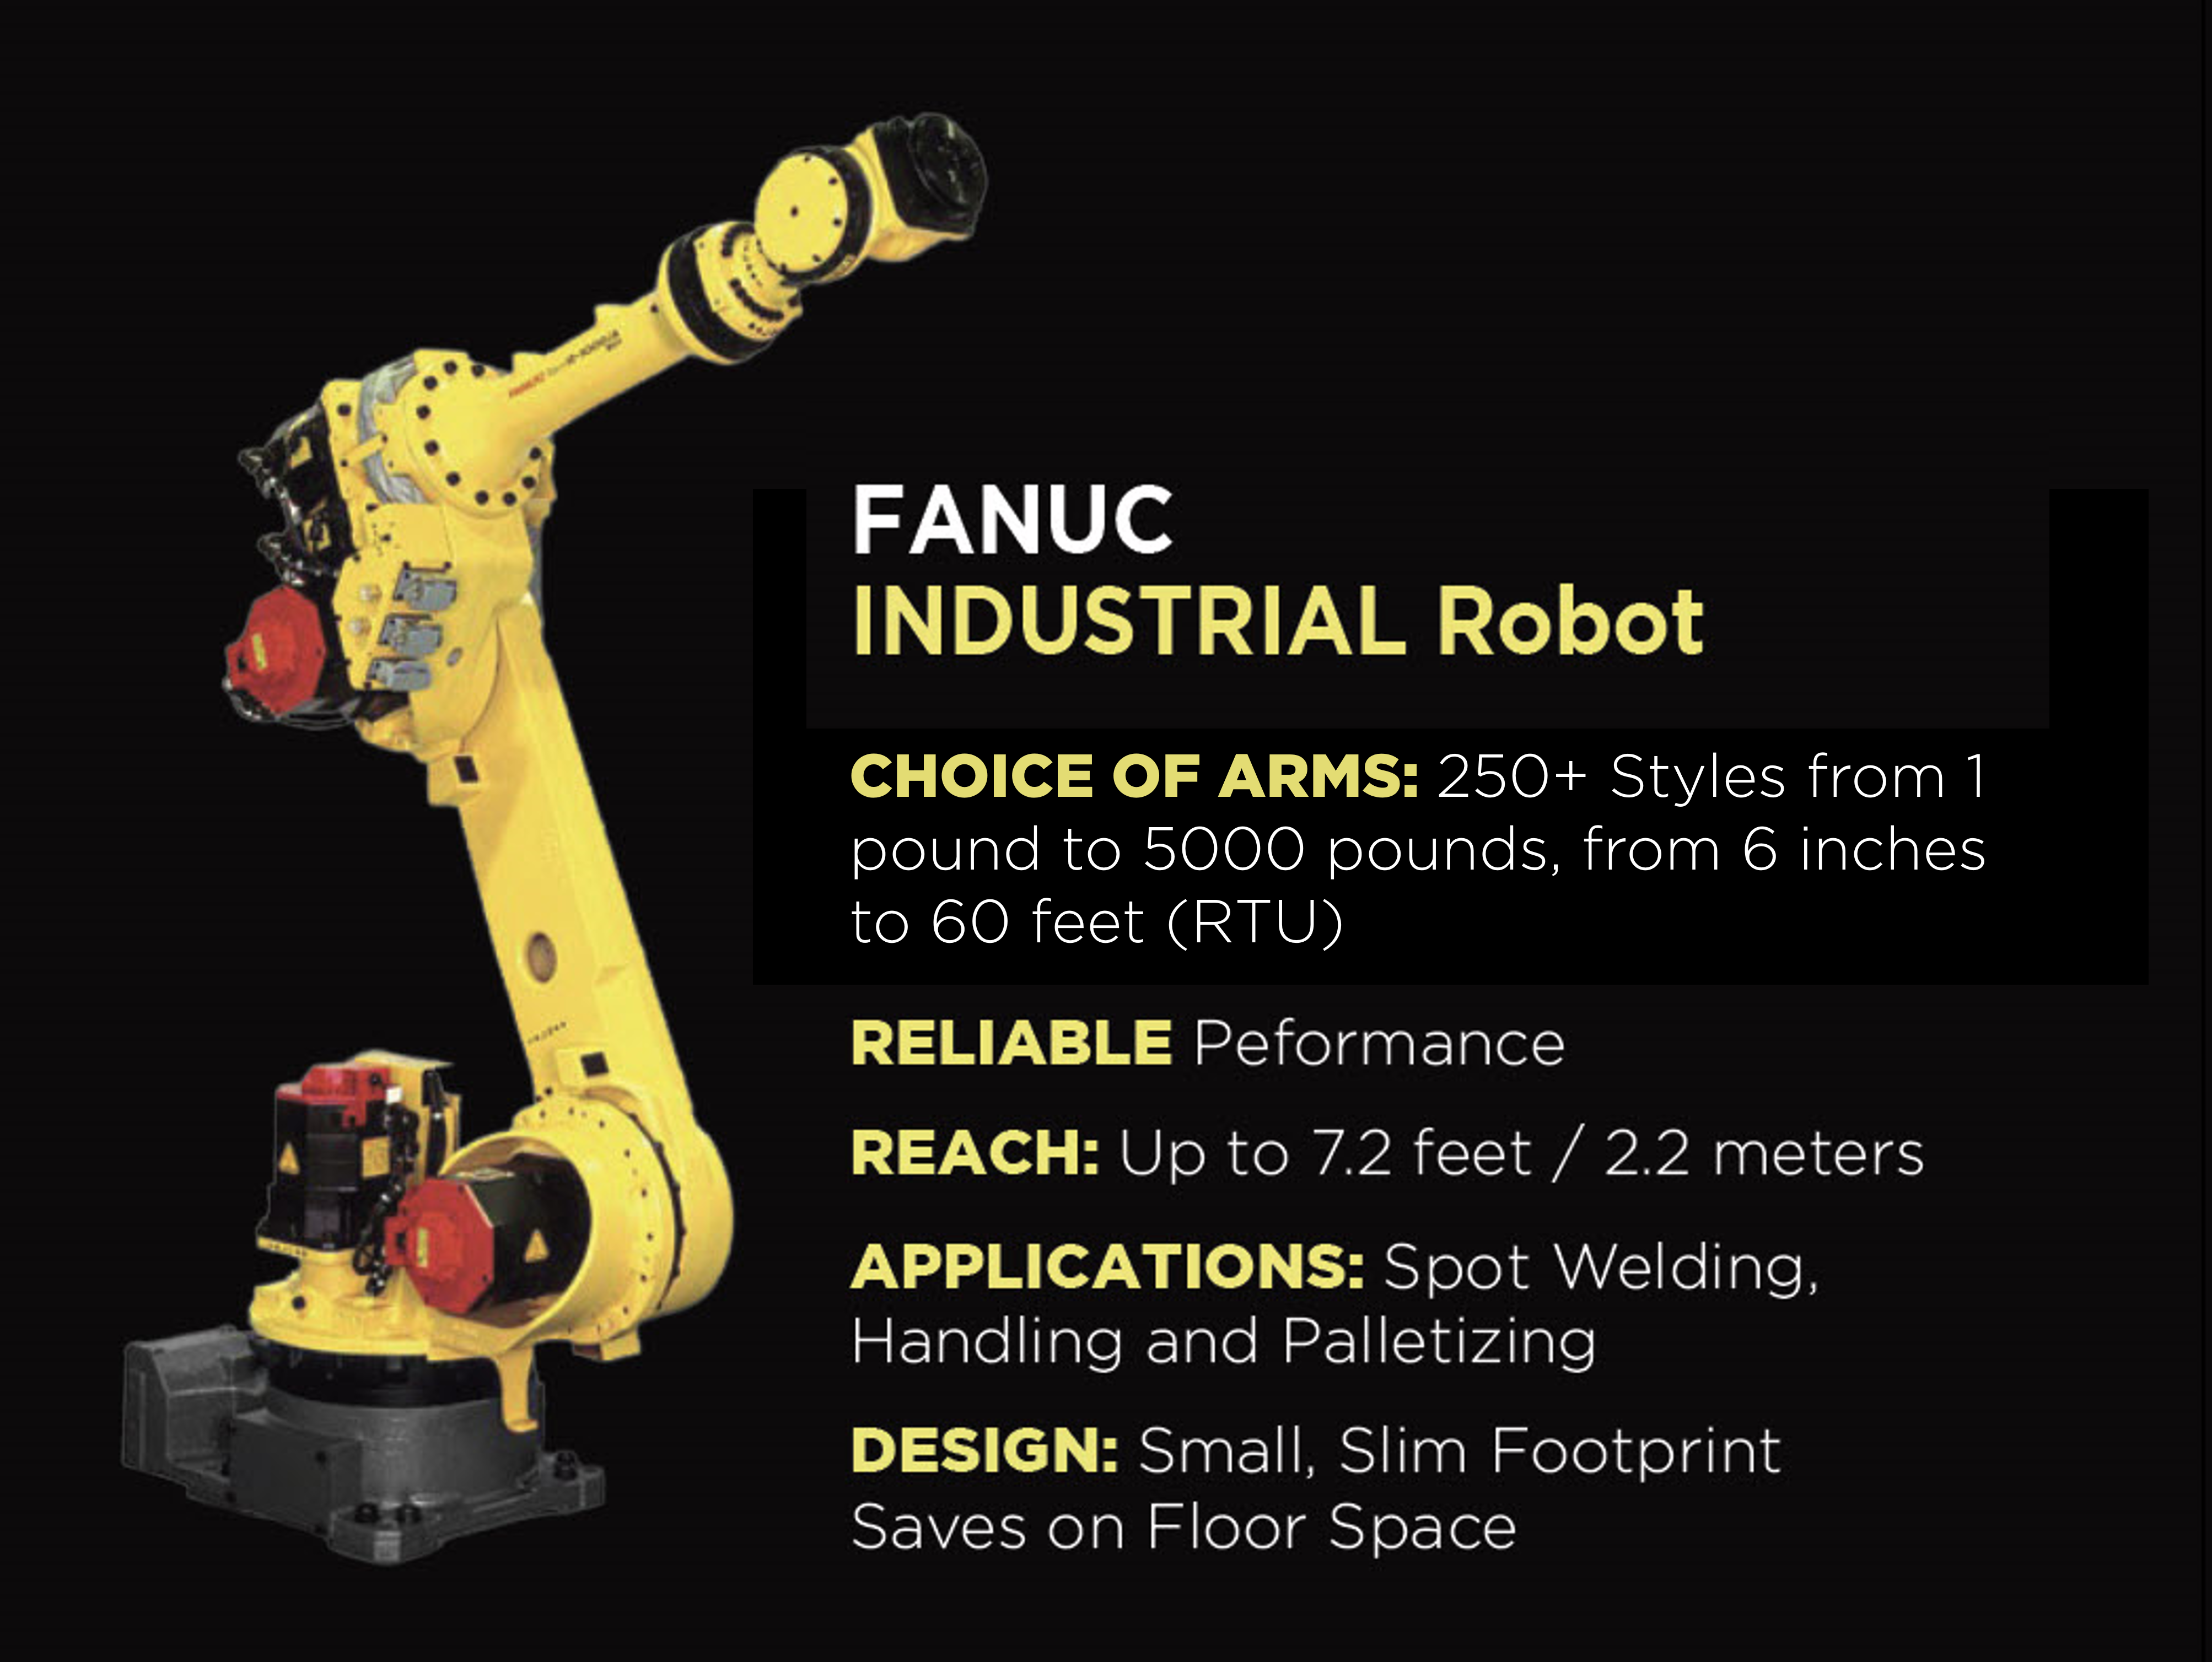 FANUC Robot Image Options